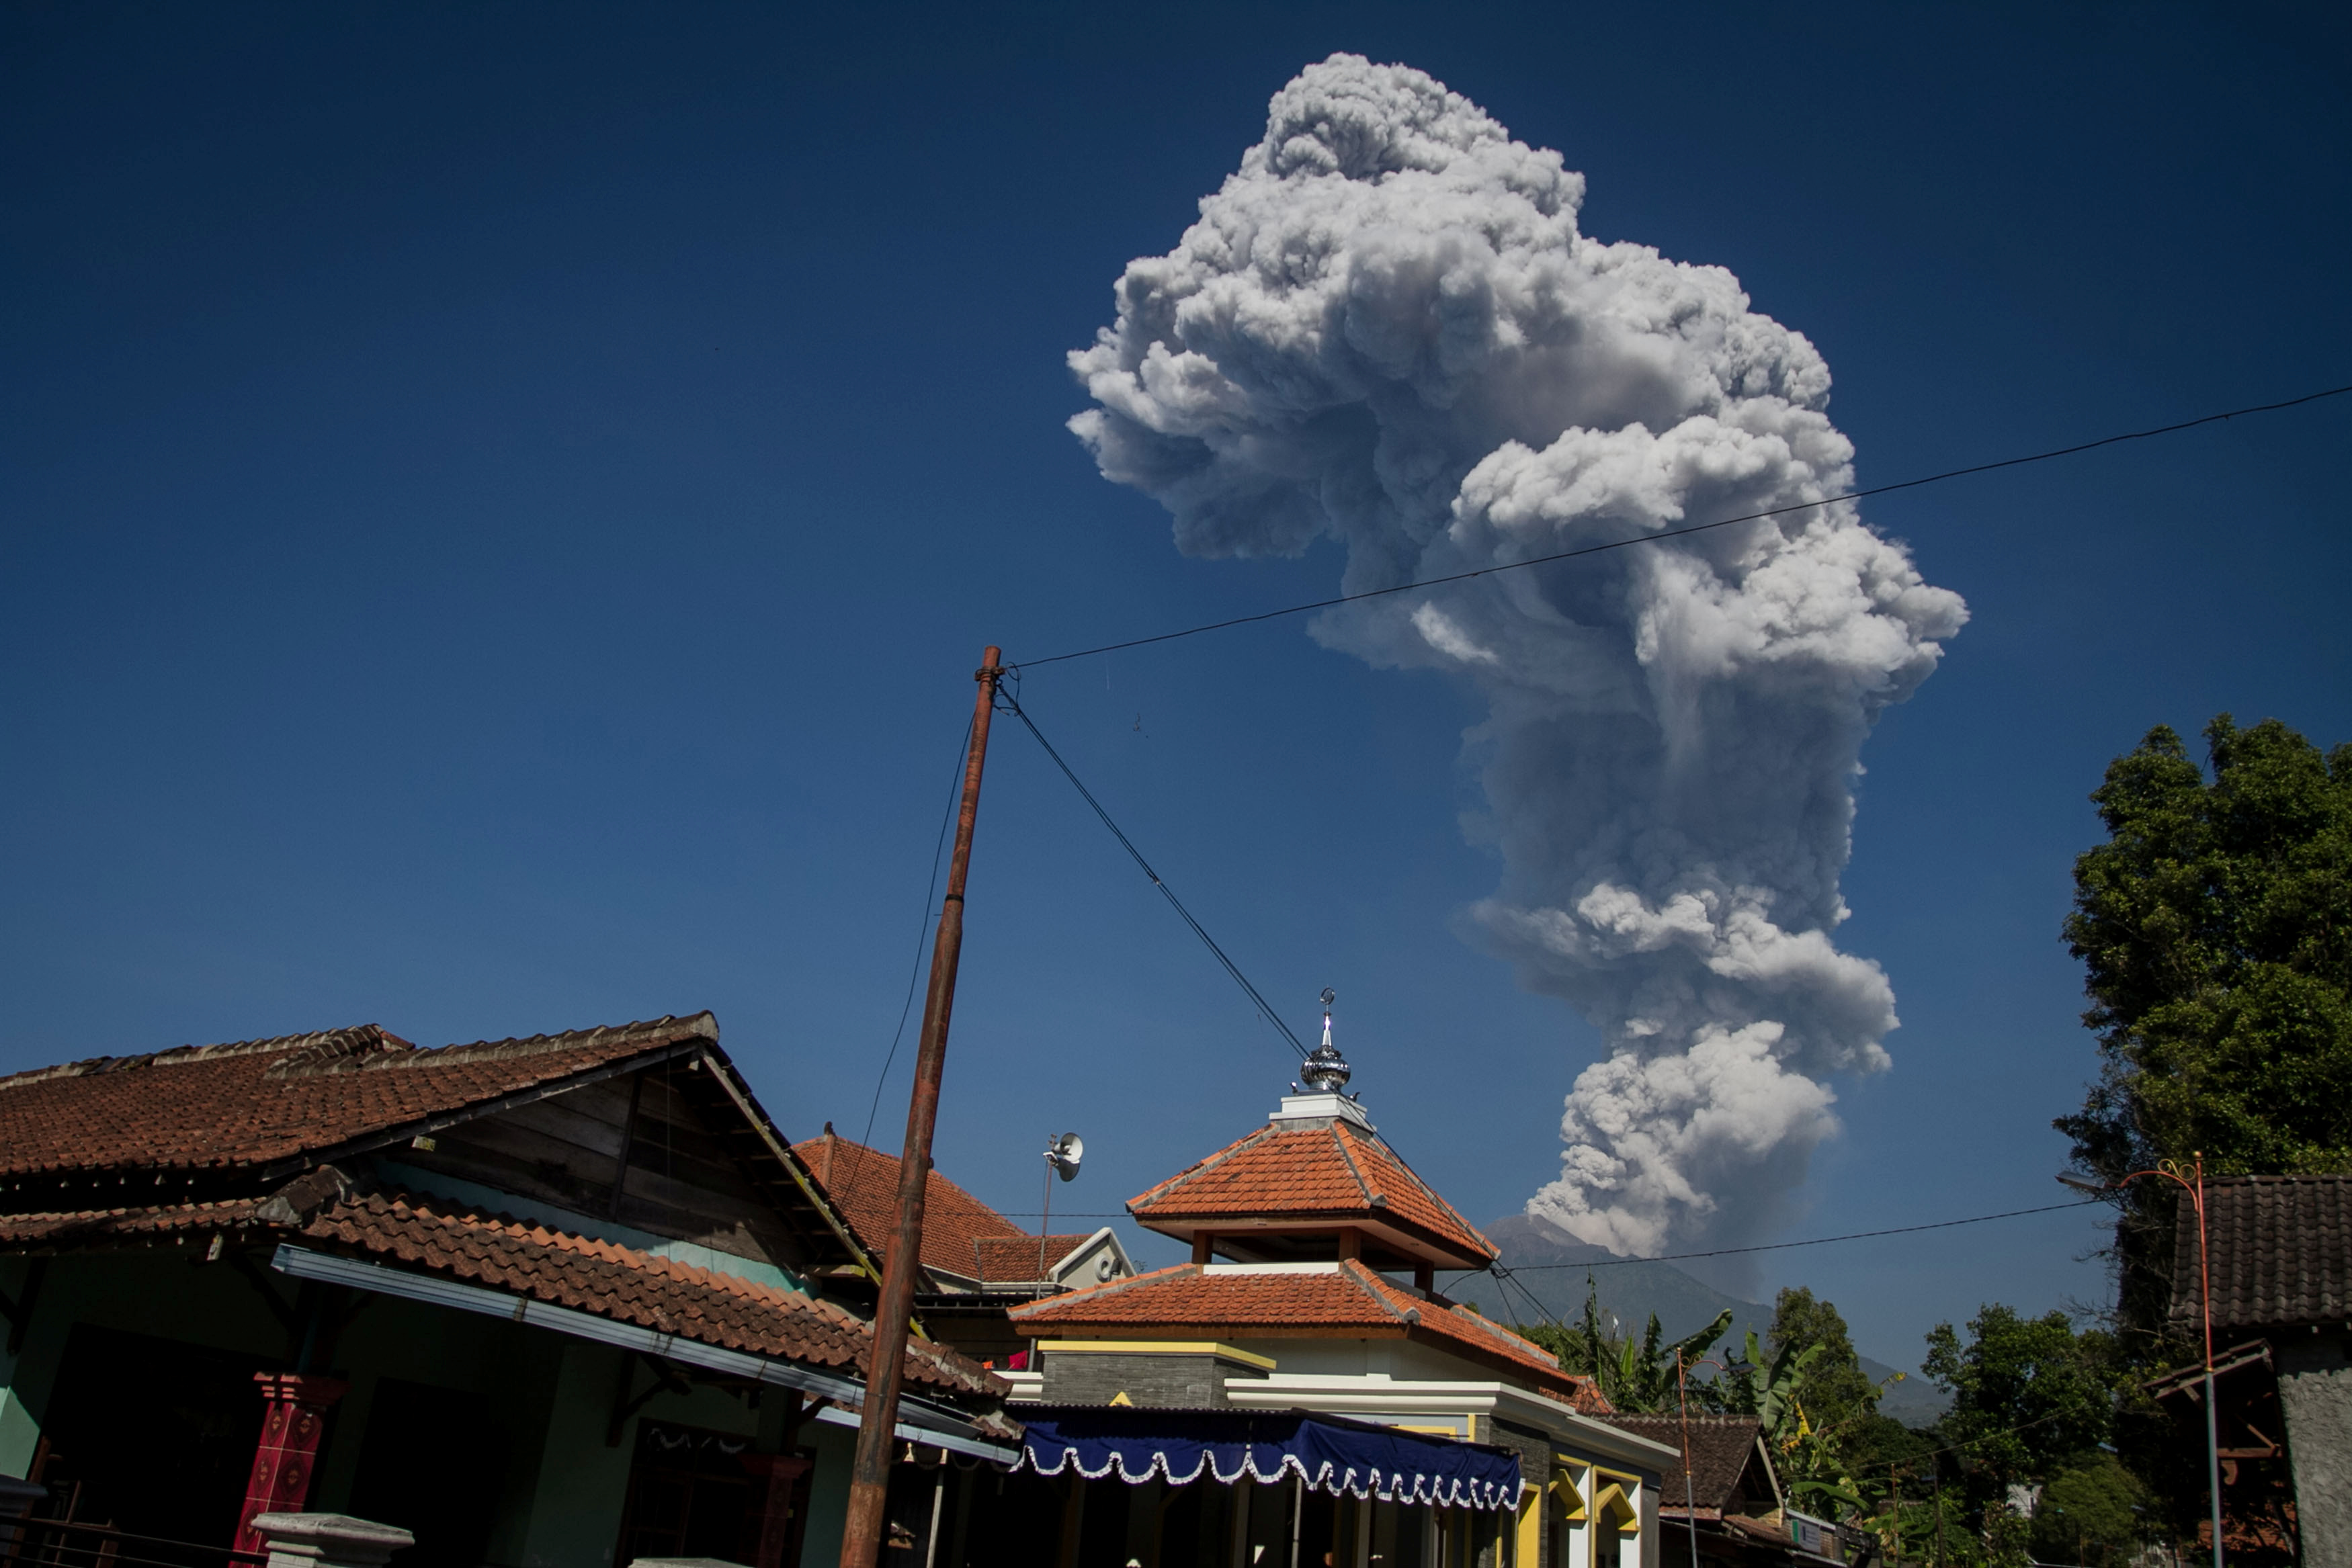 صور انبعاث دخان من بركان فى اندونيسيا (4)